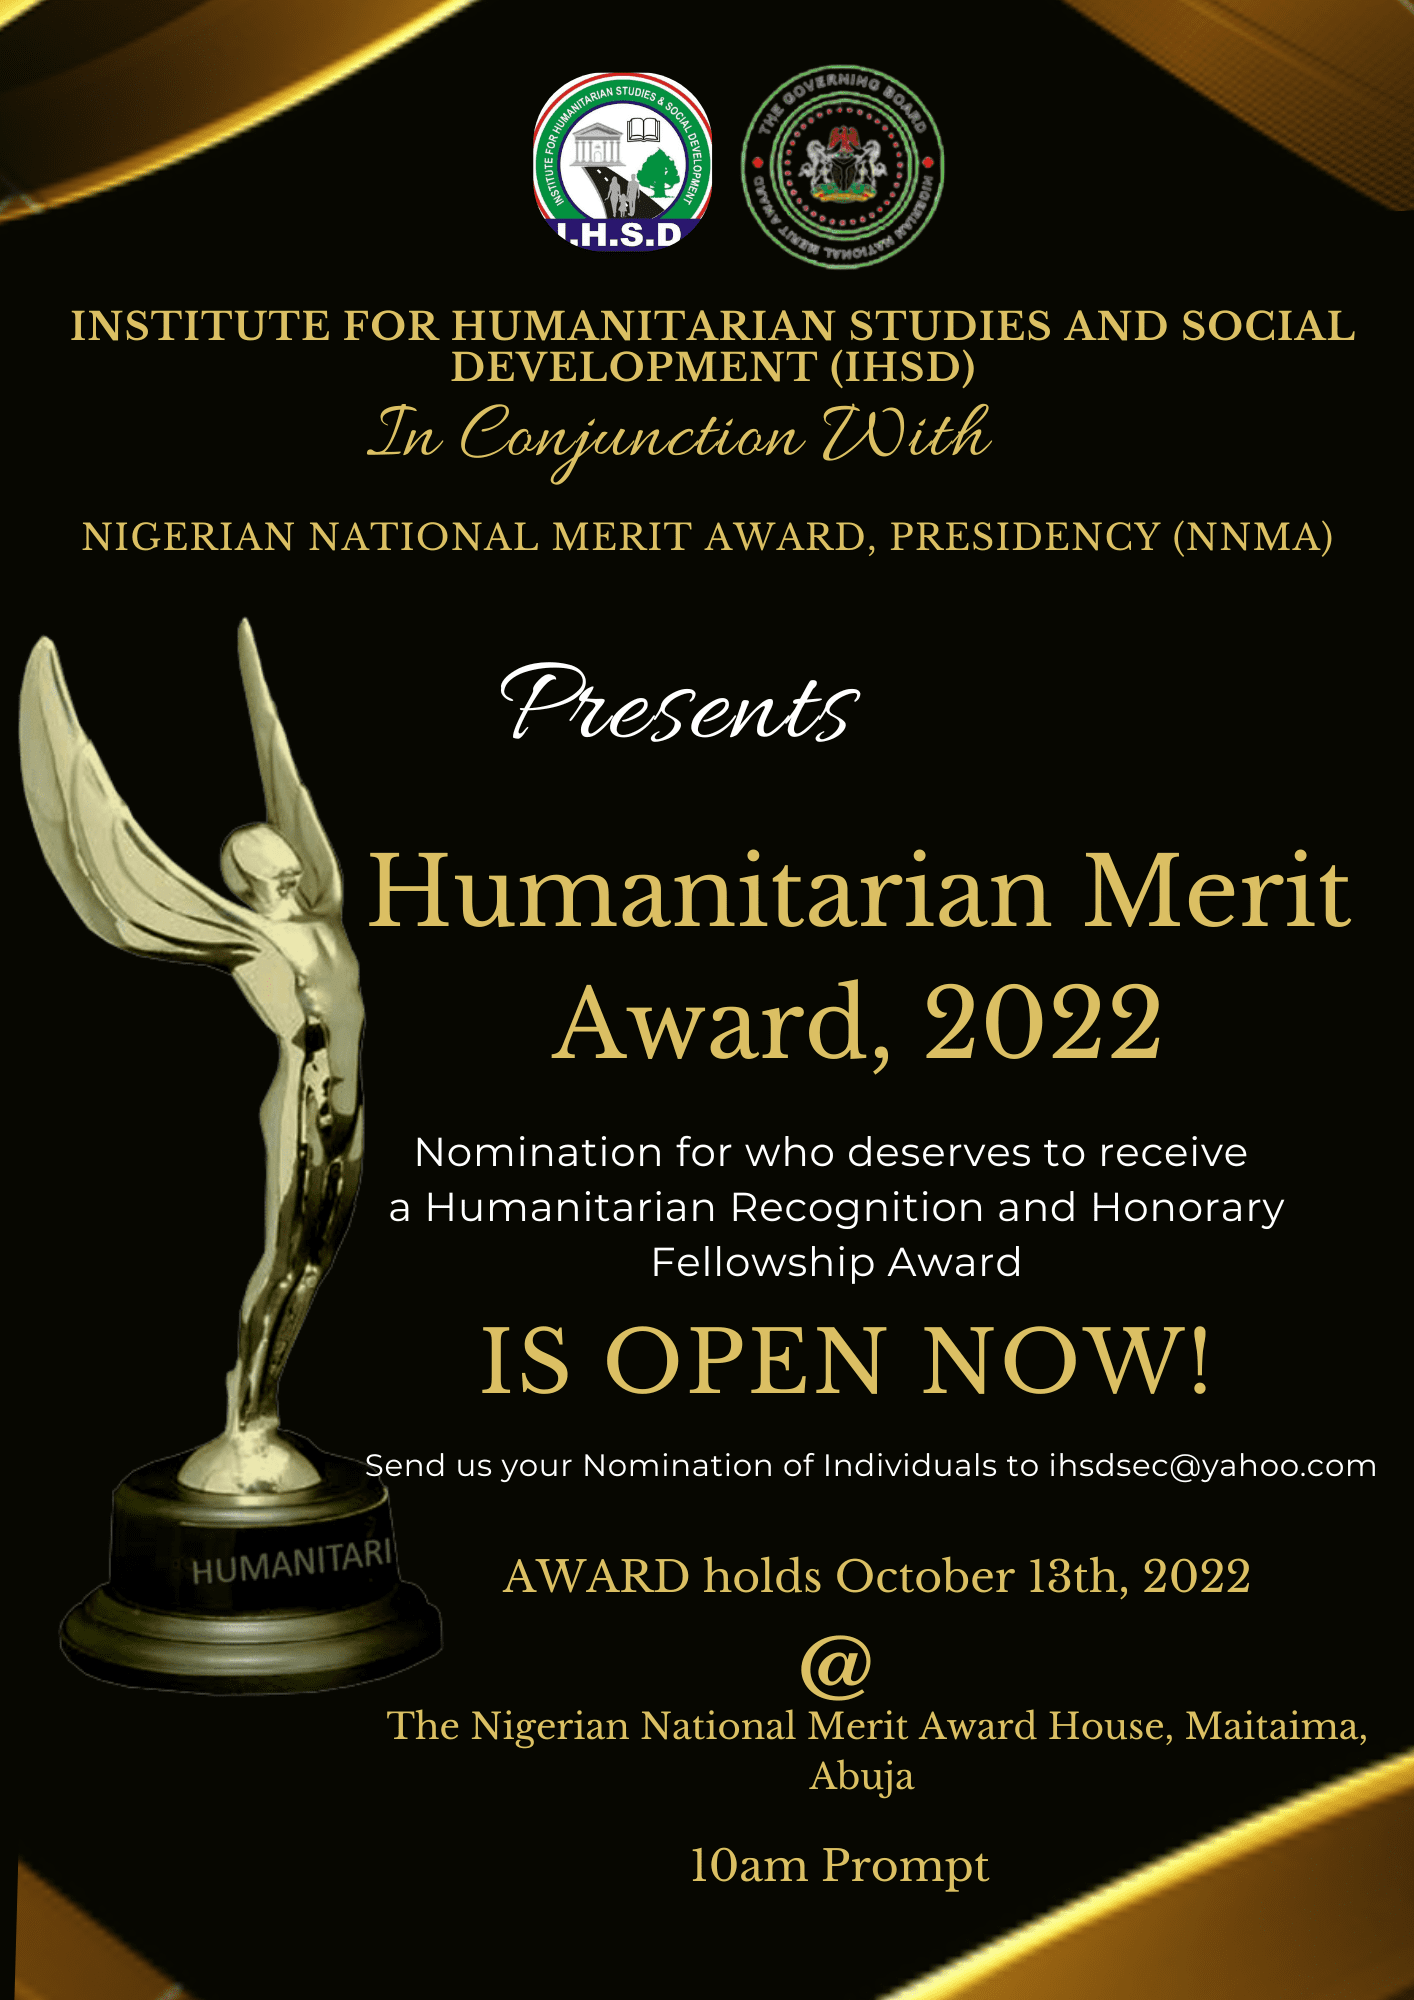 Nomination for Humanitarian Merit Award, 2022